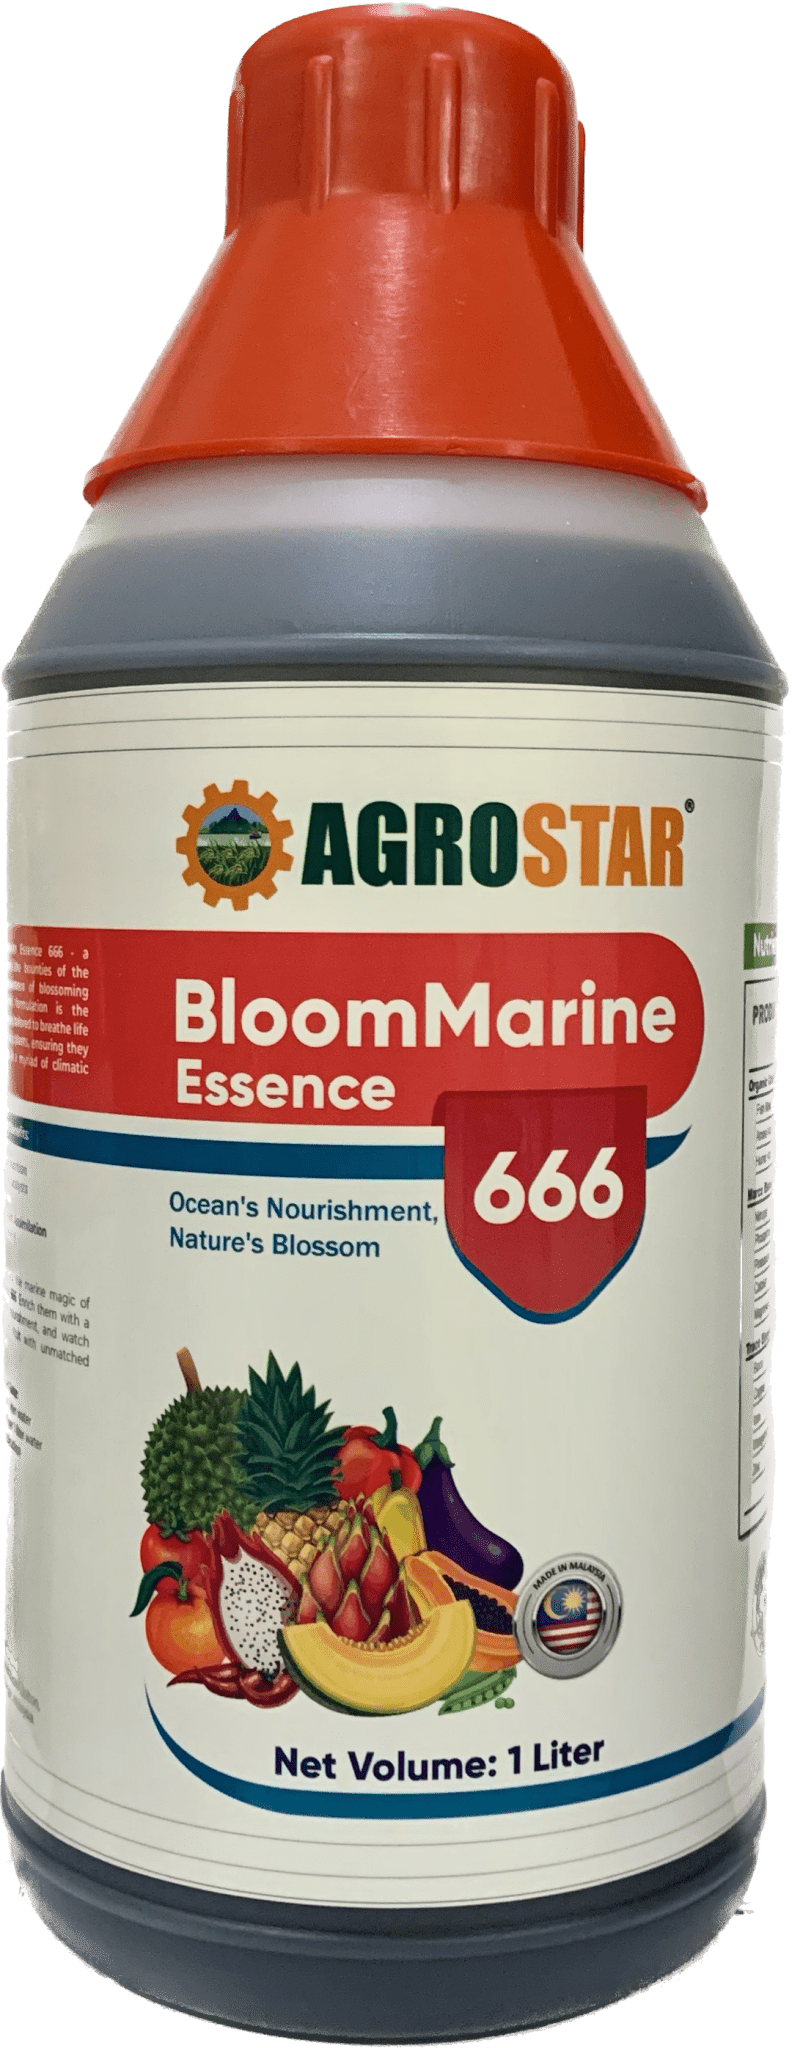 Agrostar BloomMarine Essence 666 - Farm Doktor